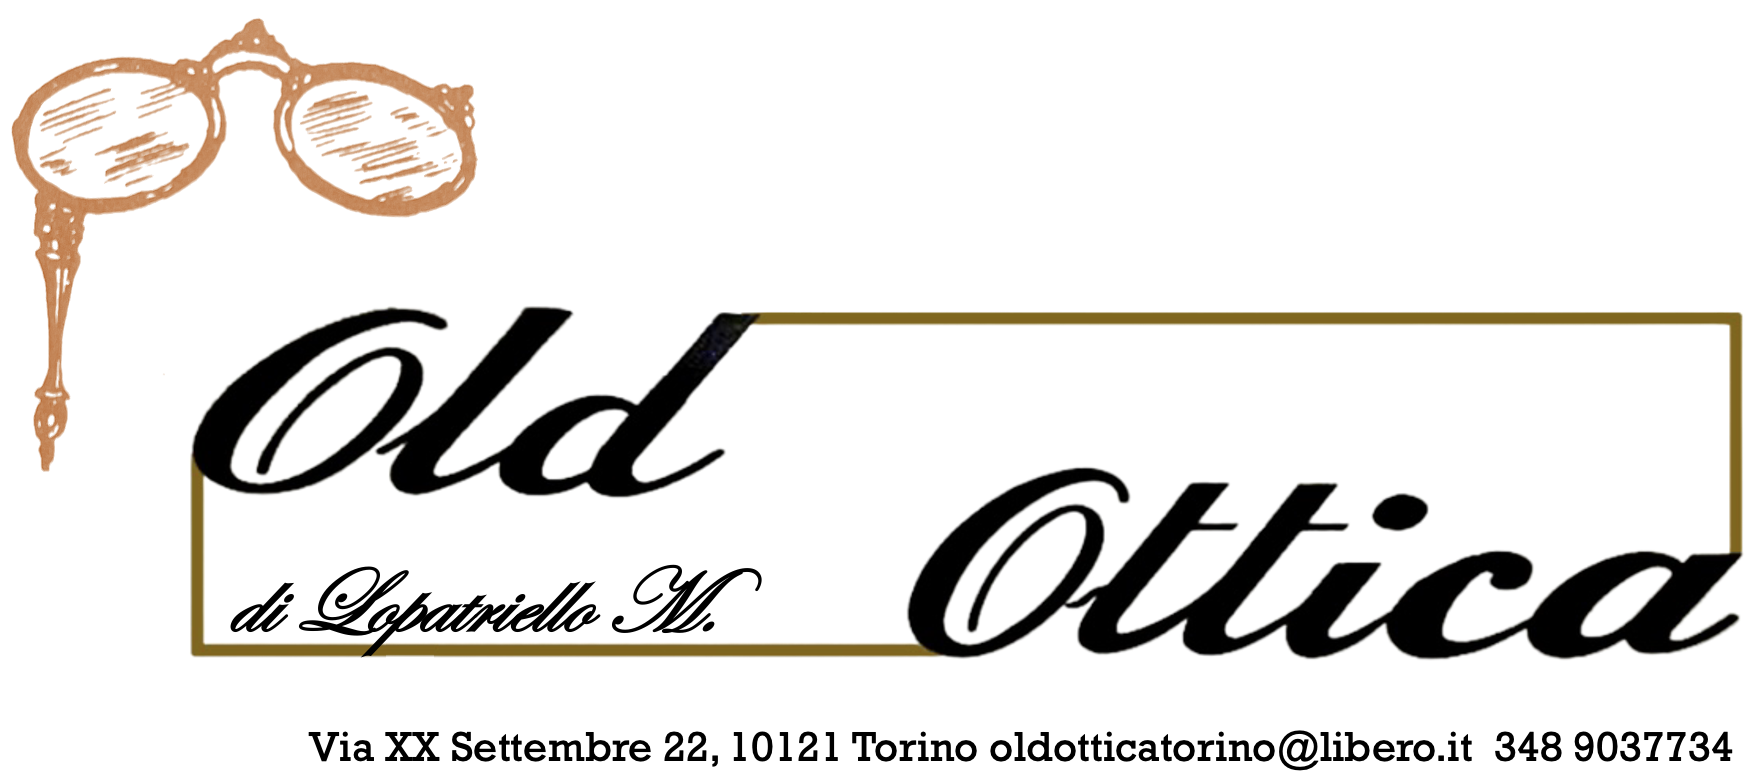 Old Ottica